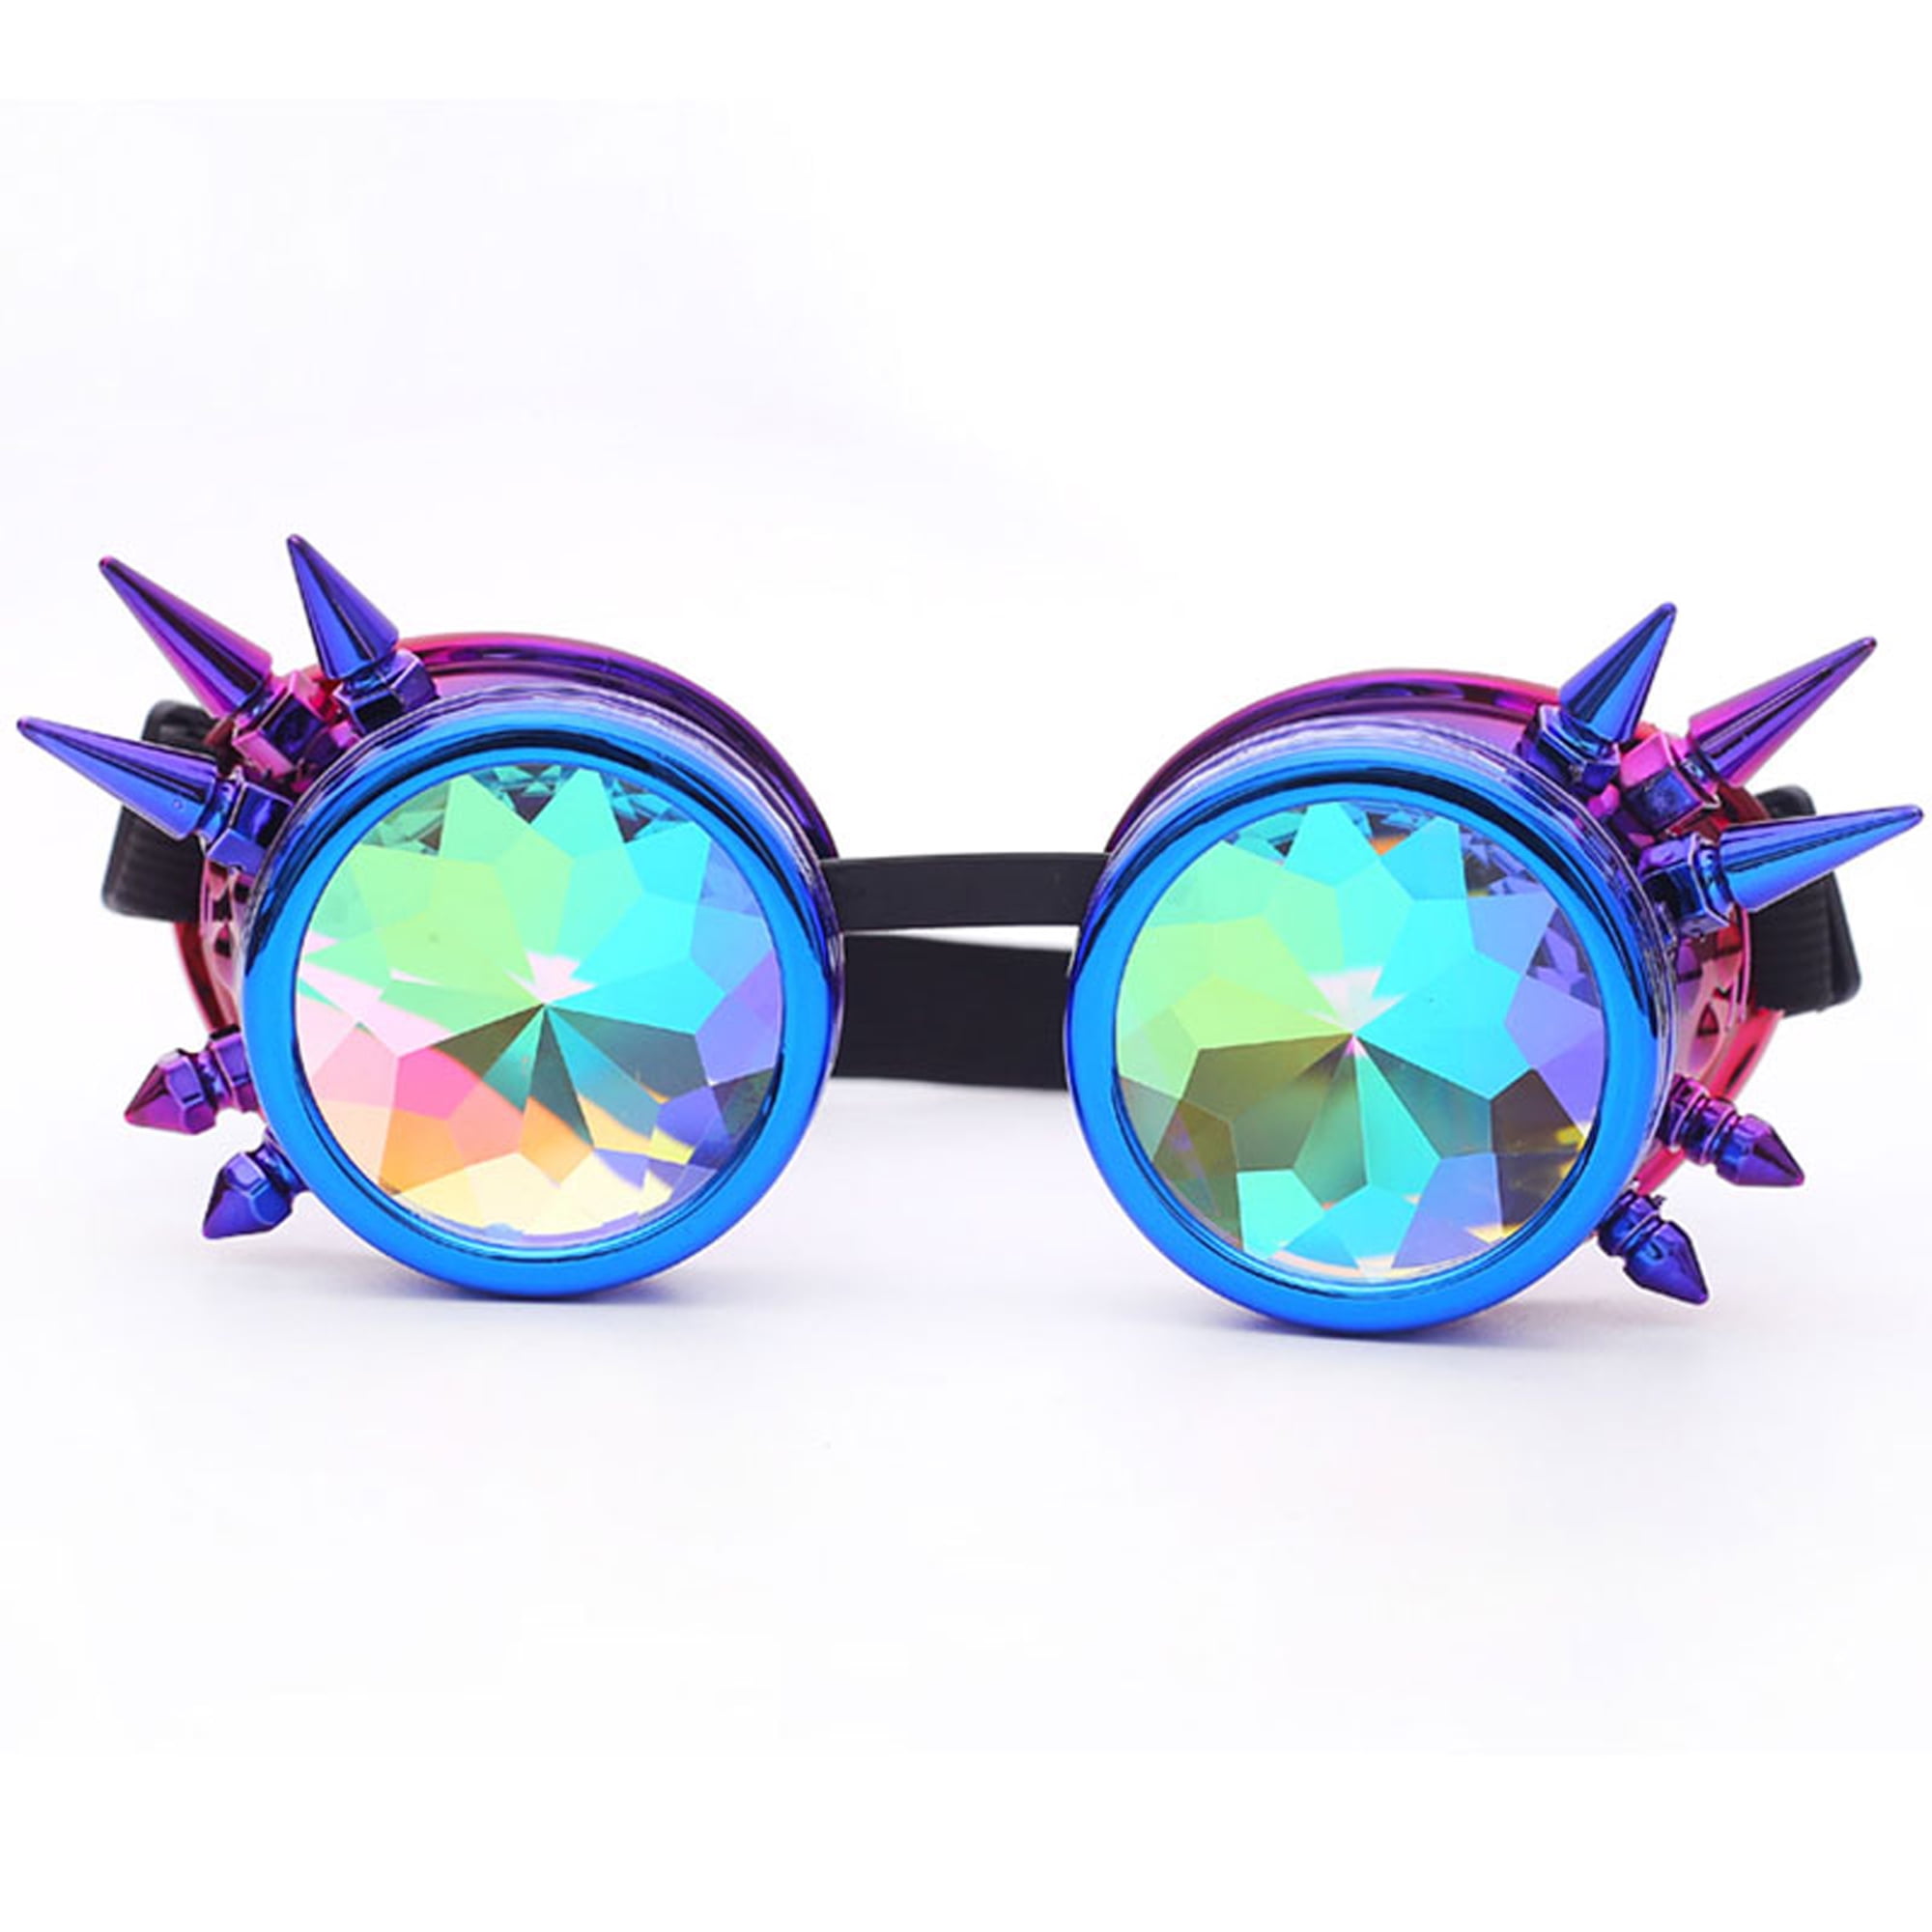 FOCUSSEXY Kaleidoscope Rainbow Goggles Steampunk Cosplay Adjustable Eyewear 